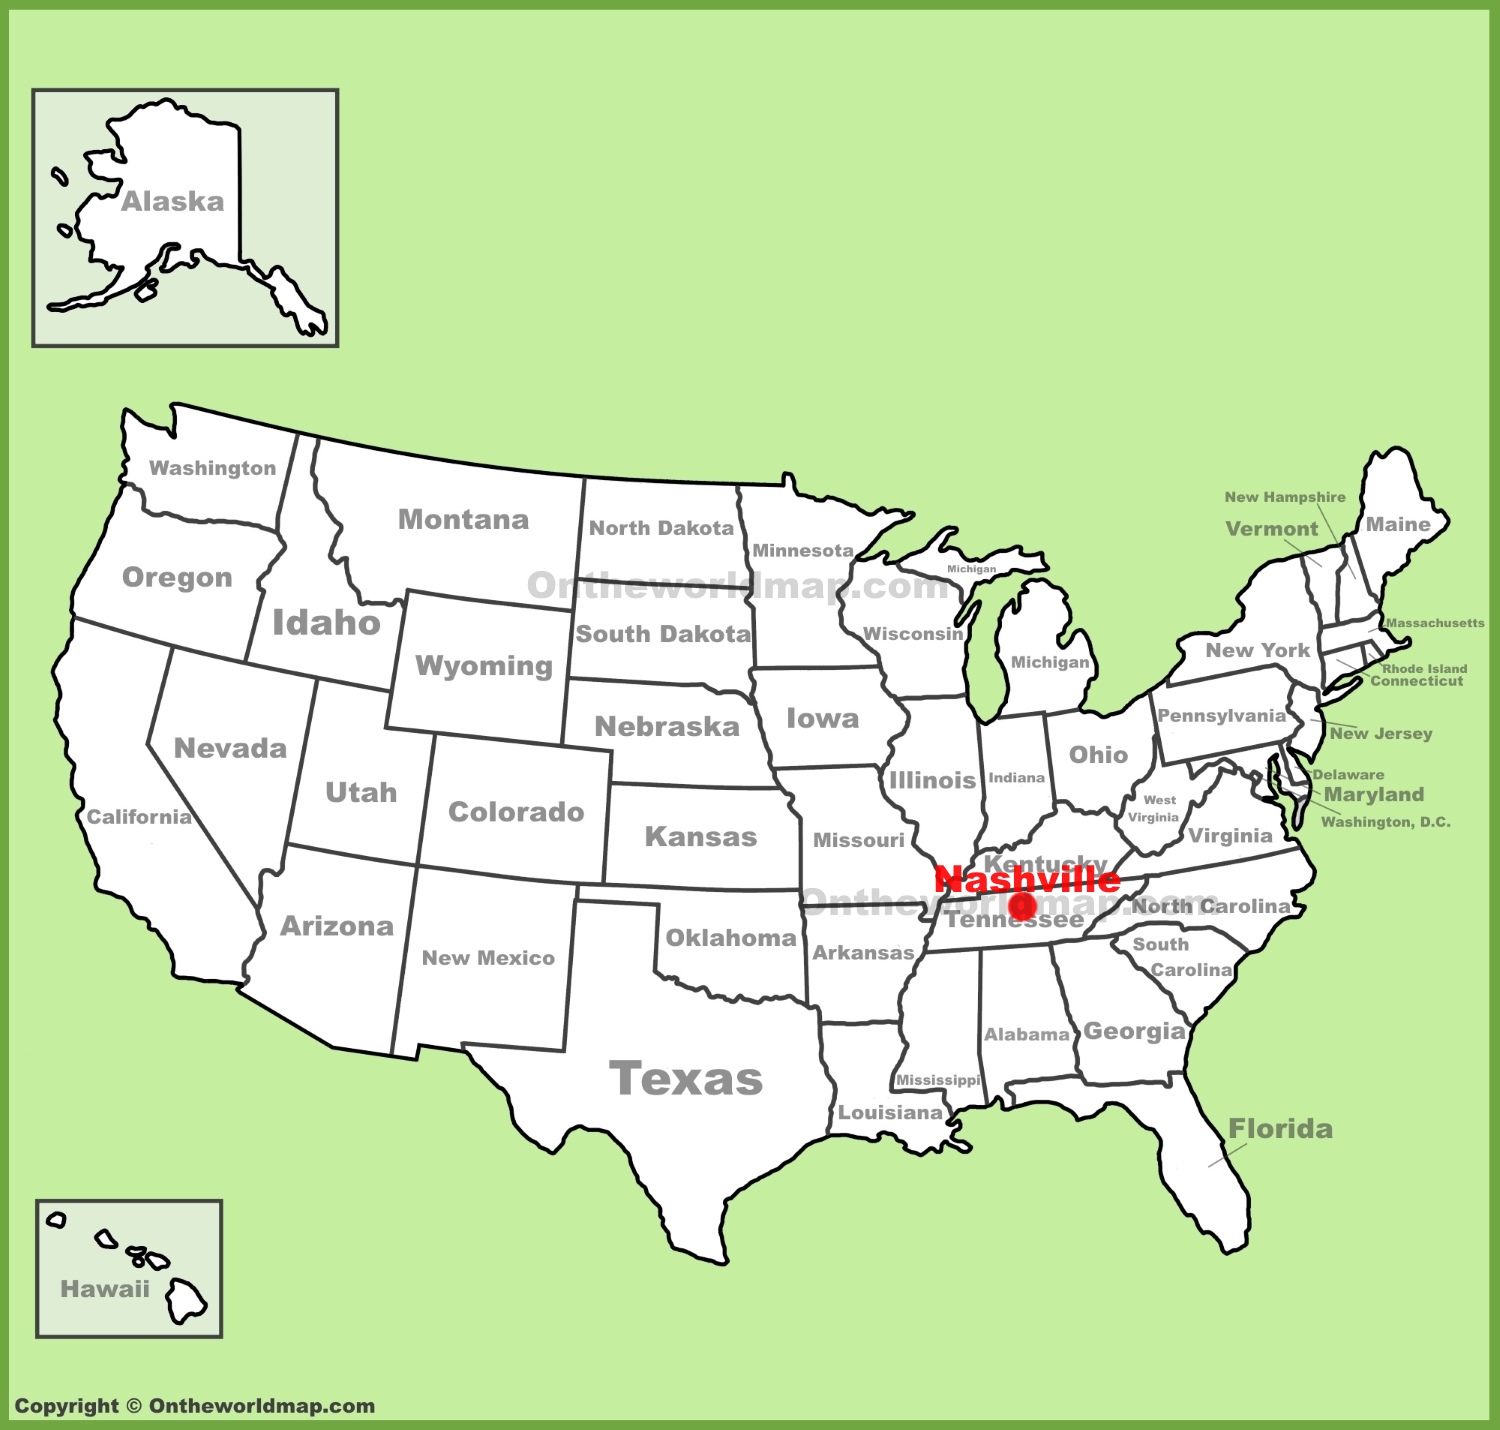 Nashville On Map Of Usa - Allyce Maitilde